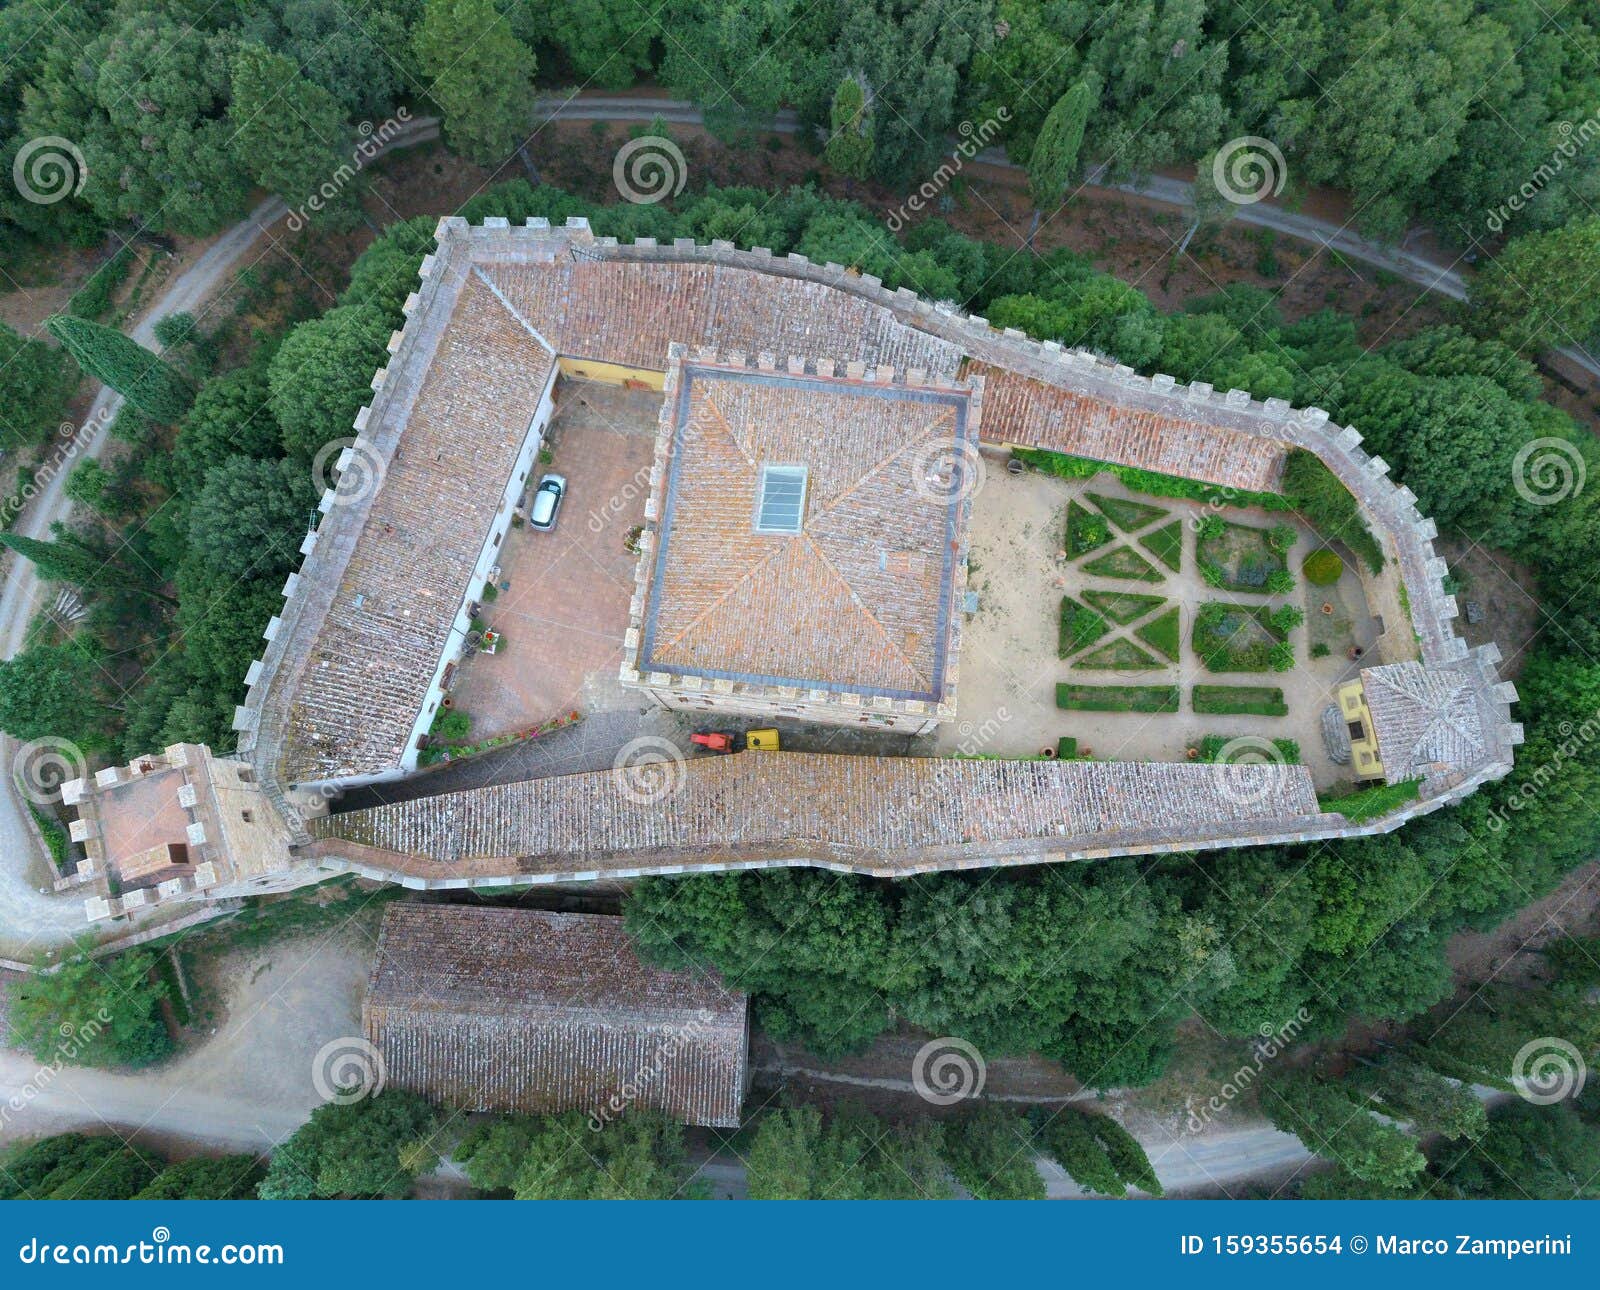 aereal view strozzavolpe castle chianti drone